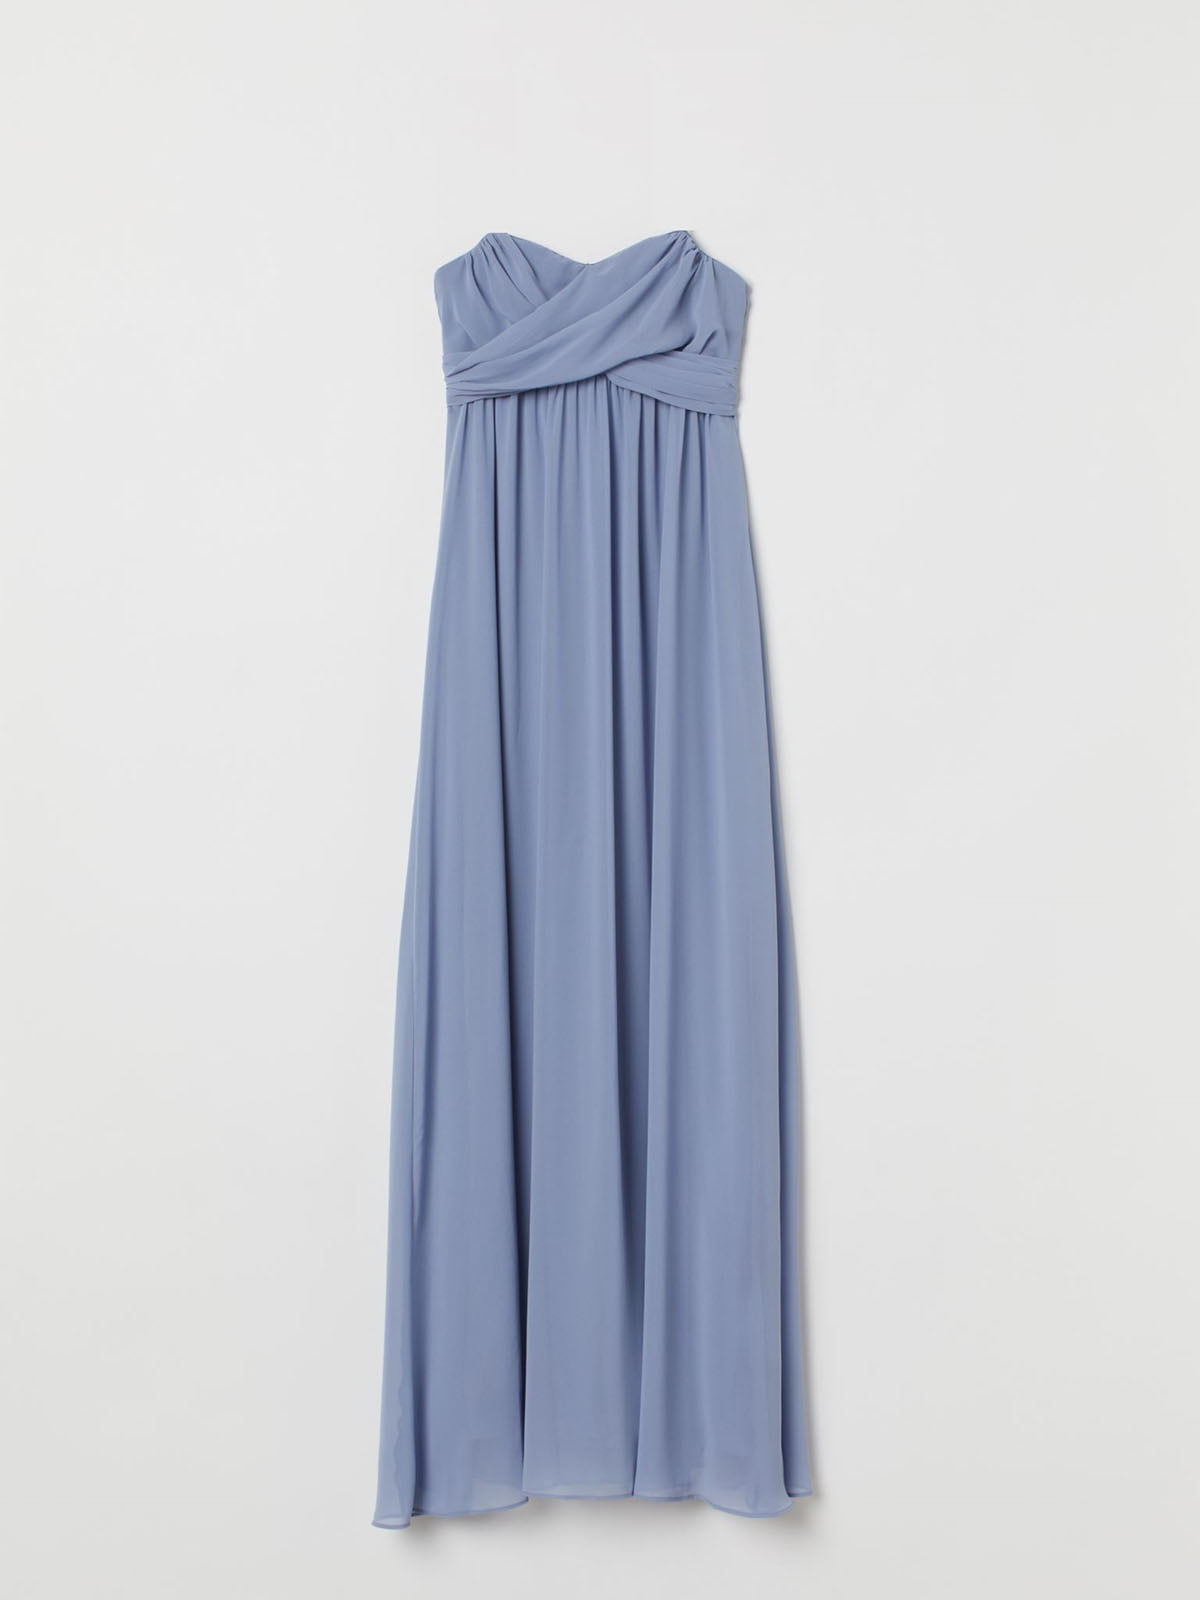 Платье голубое | 5779236